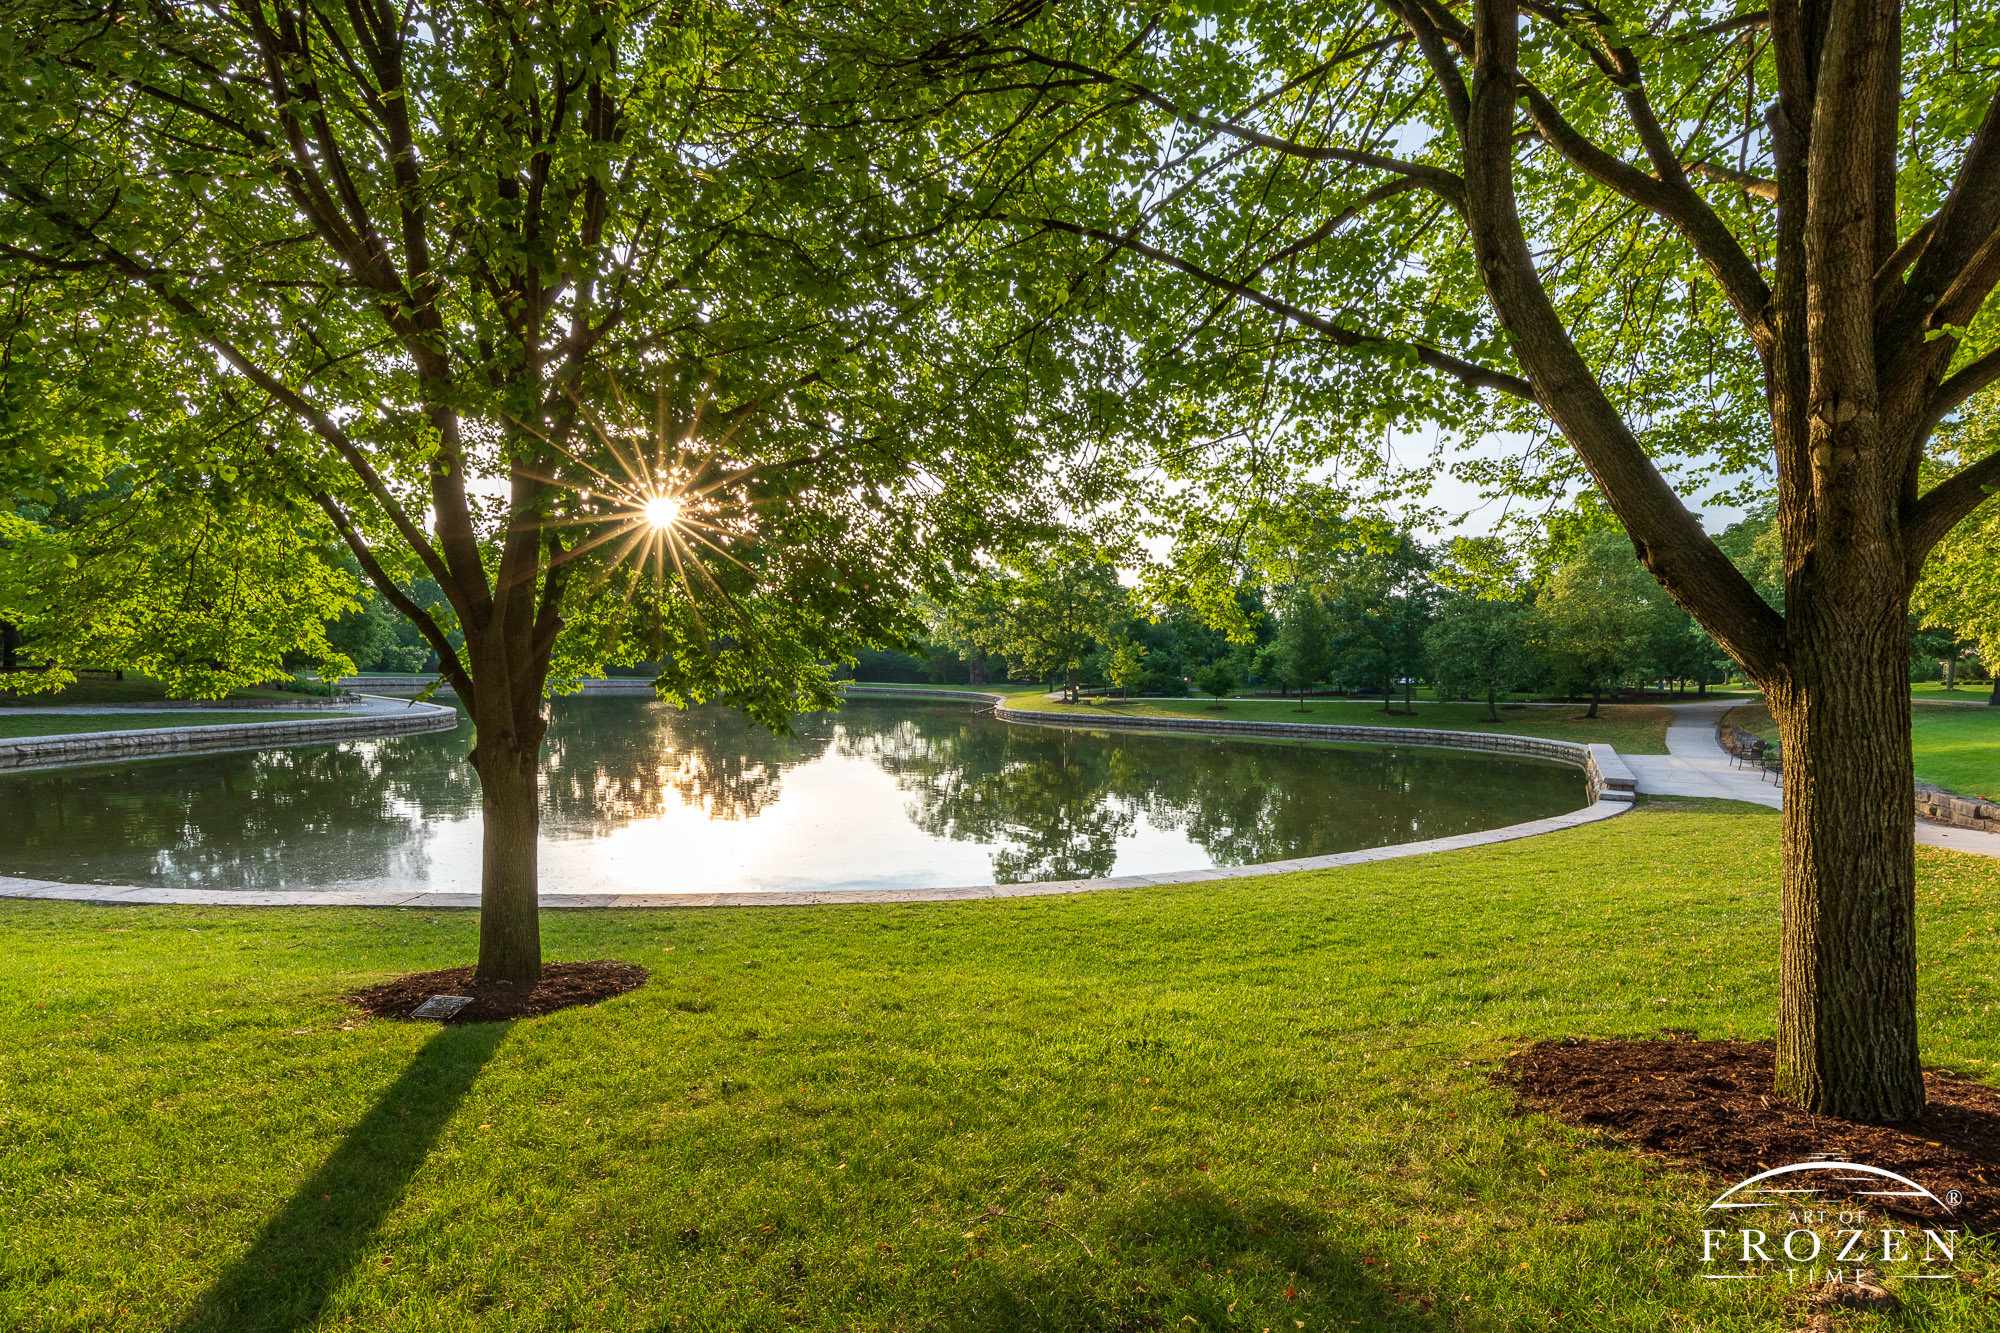 A summer sunrise over Kettering Ohio's Lincoln Park where the surrrounding trees gently filter the morning light